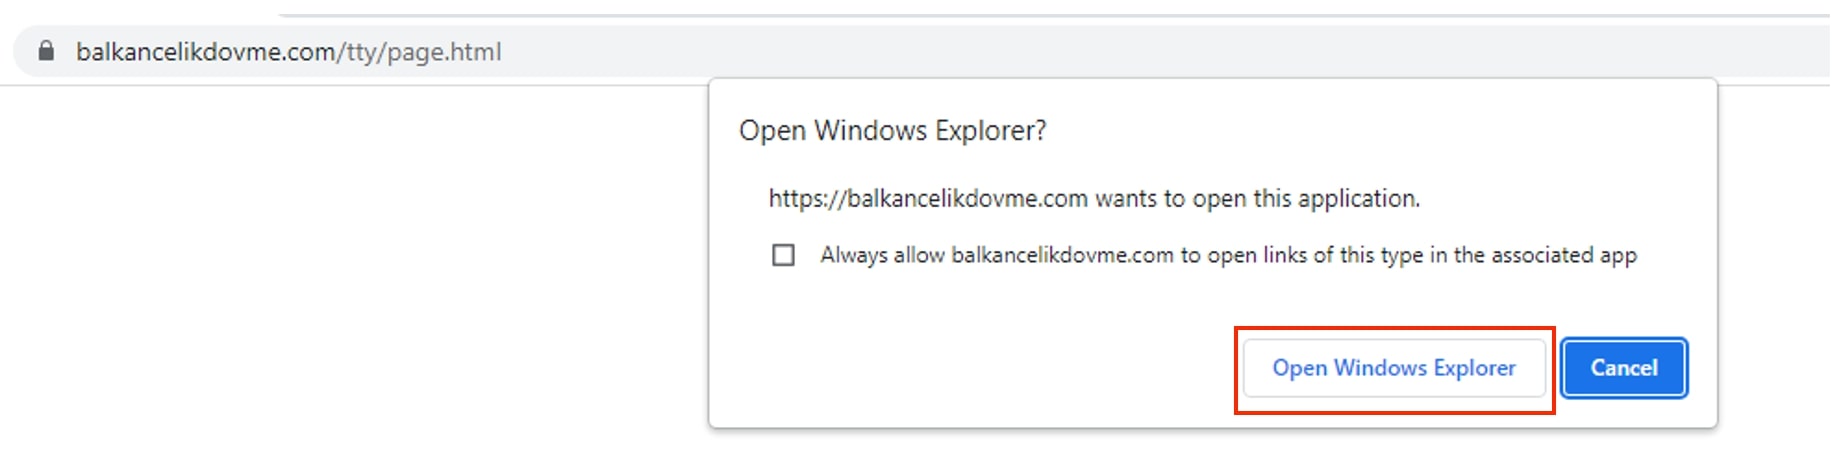 Figure 5: Warning to Open Windows Explorer